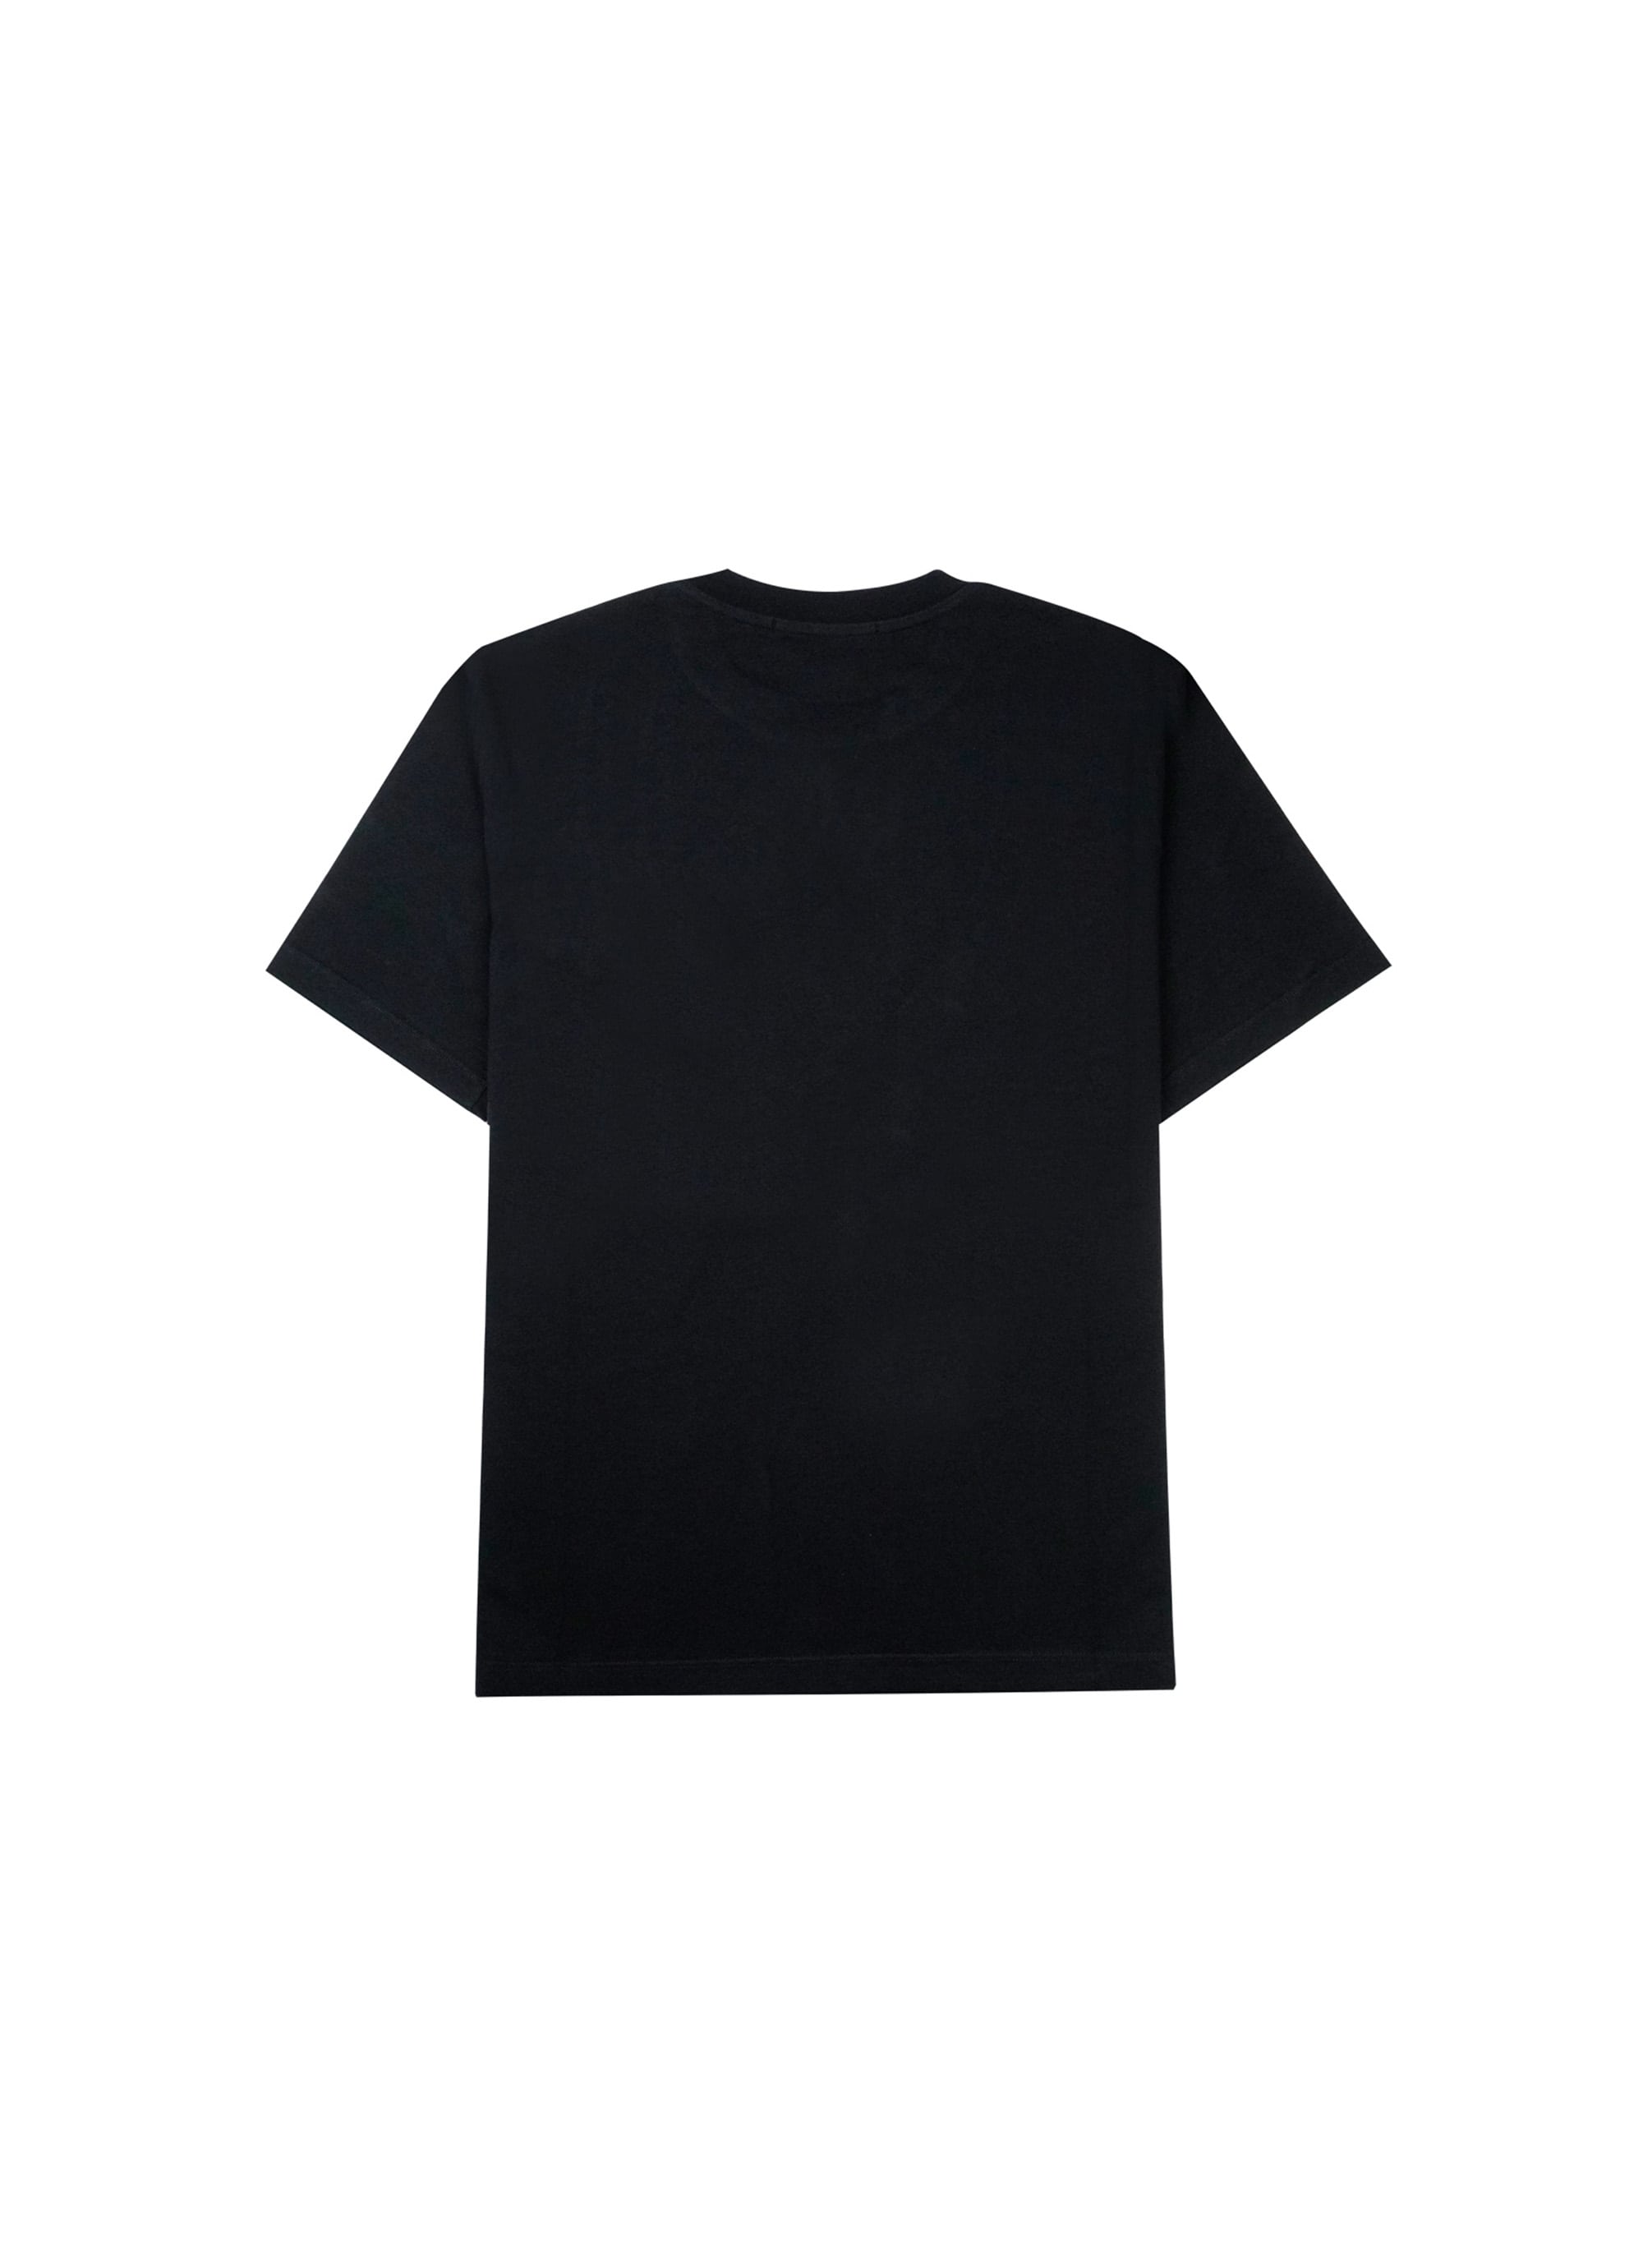 【NEW】クルーネック 刺繍ロゴTシャツ 詳細画像 ブラック 2